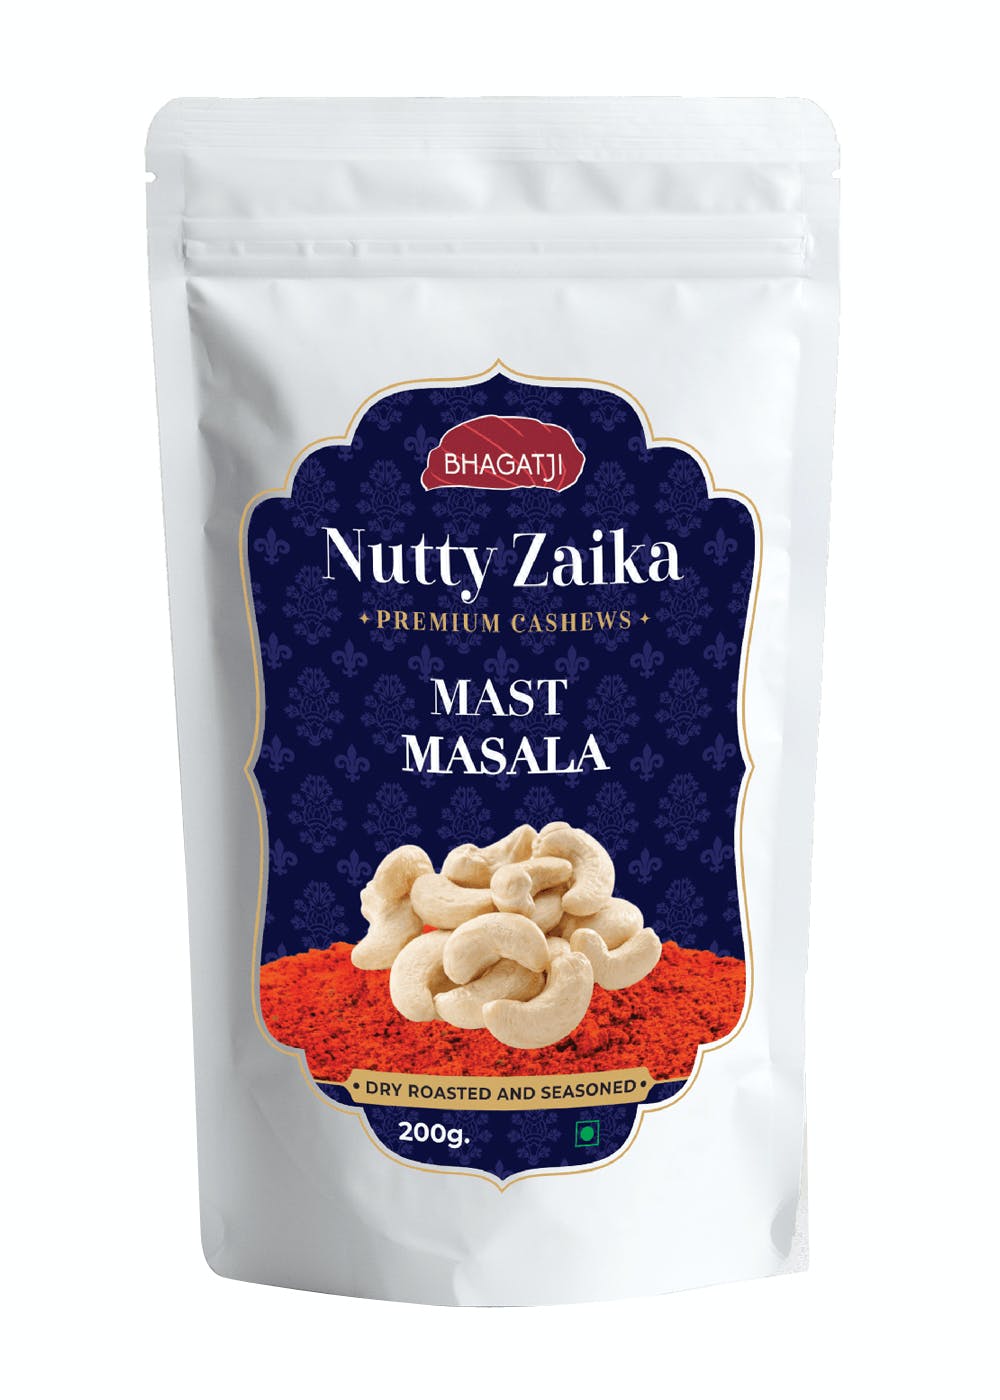 Nutty Zaika Premium Cashews (Mast Masala) - 200g